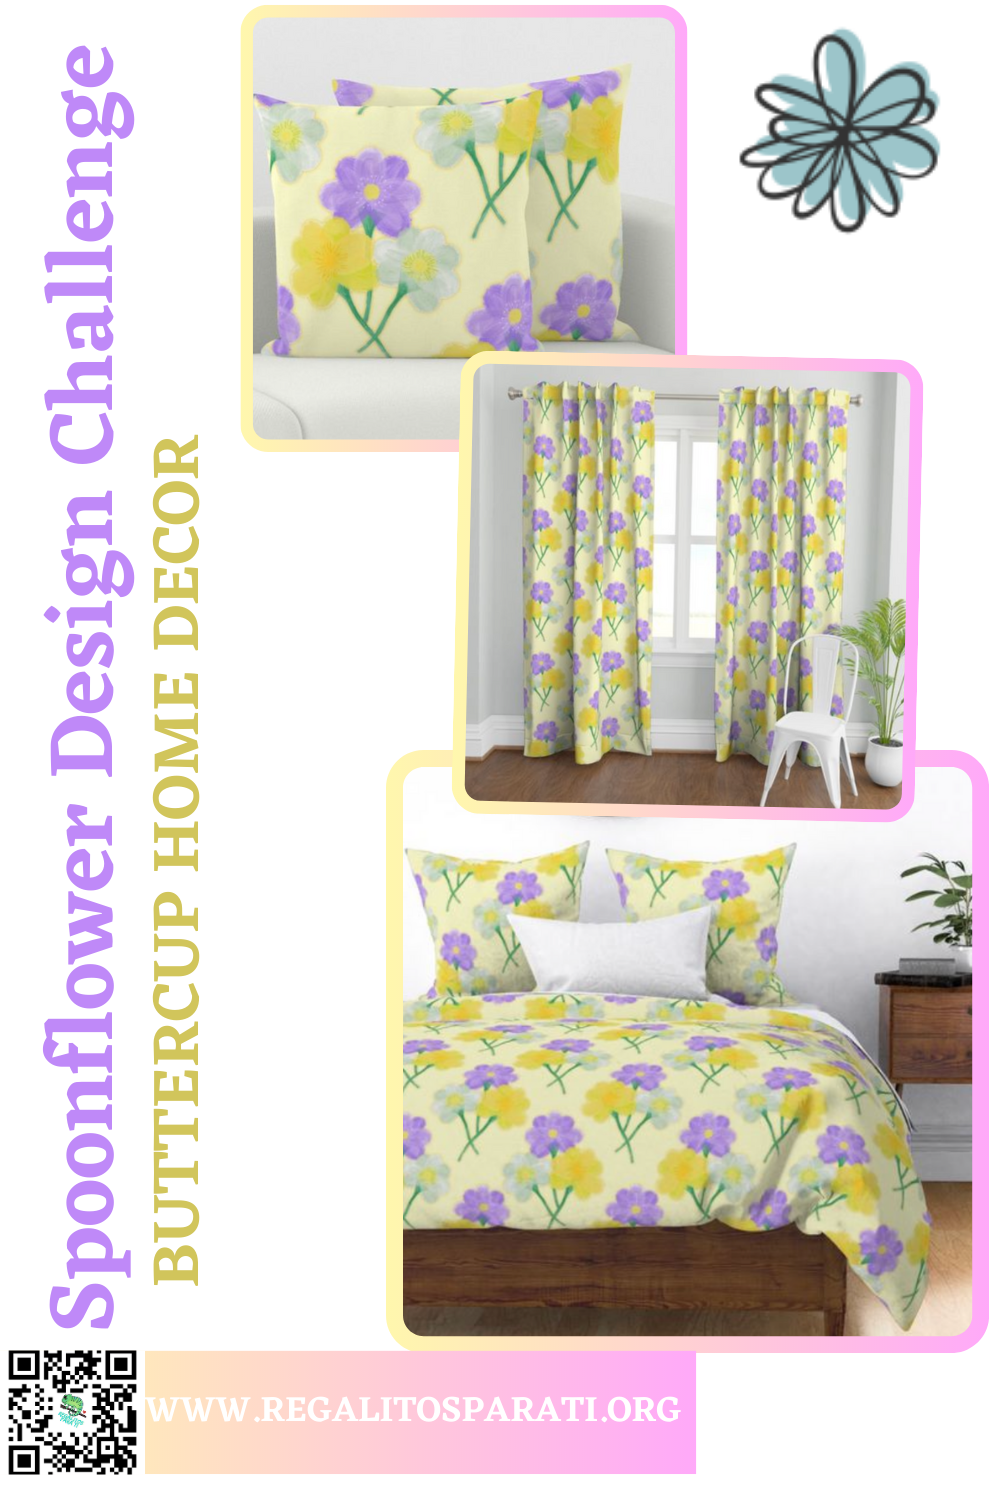 How to Design for Bedding - Spoonflower Blog